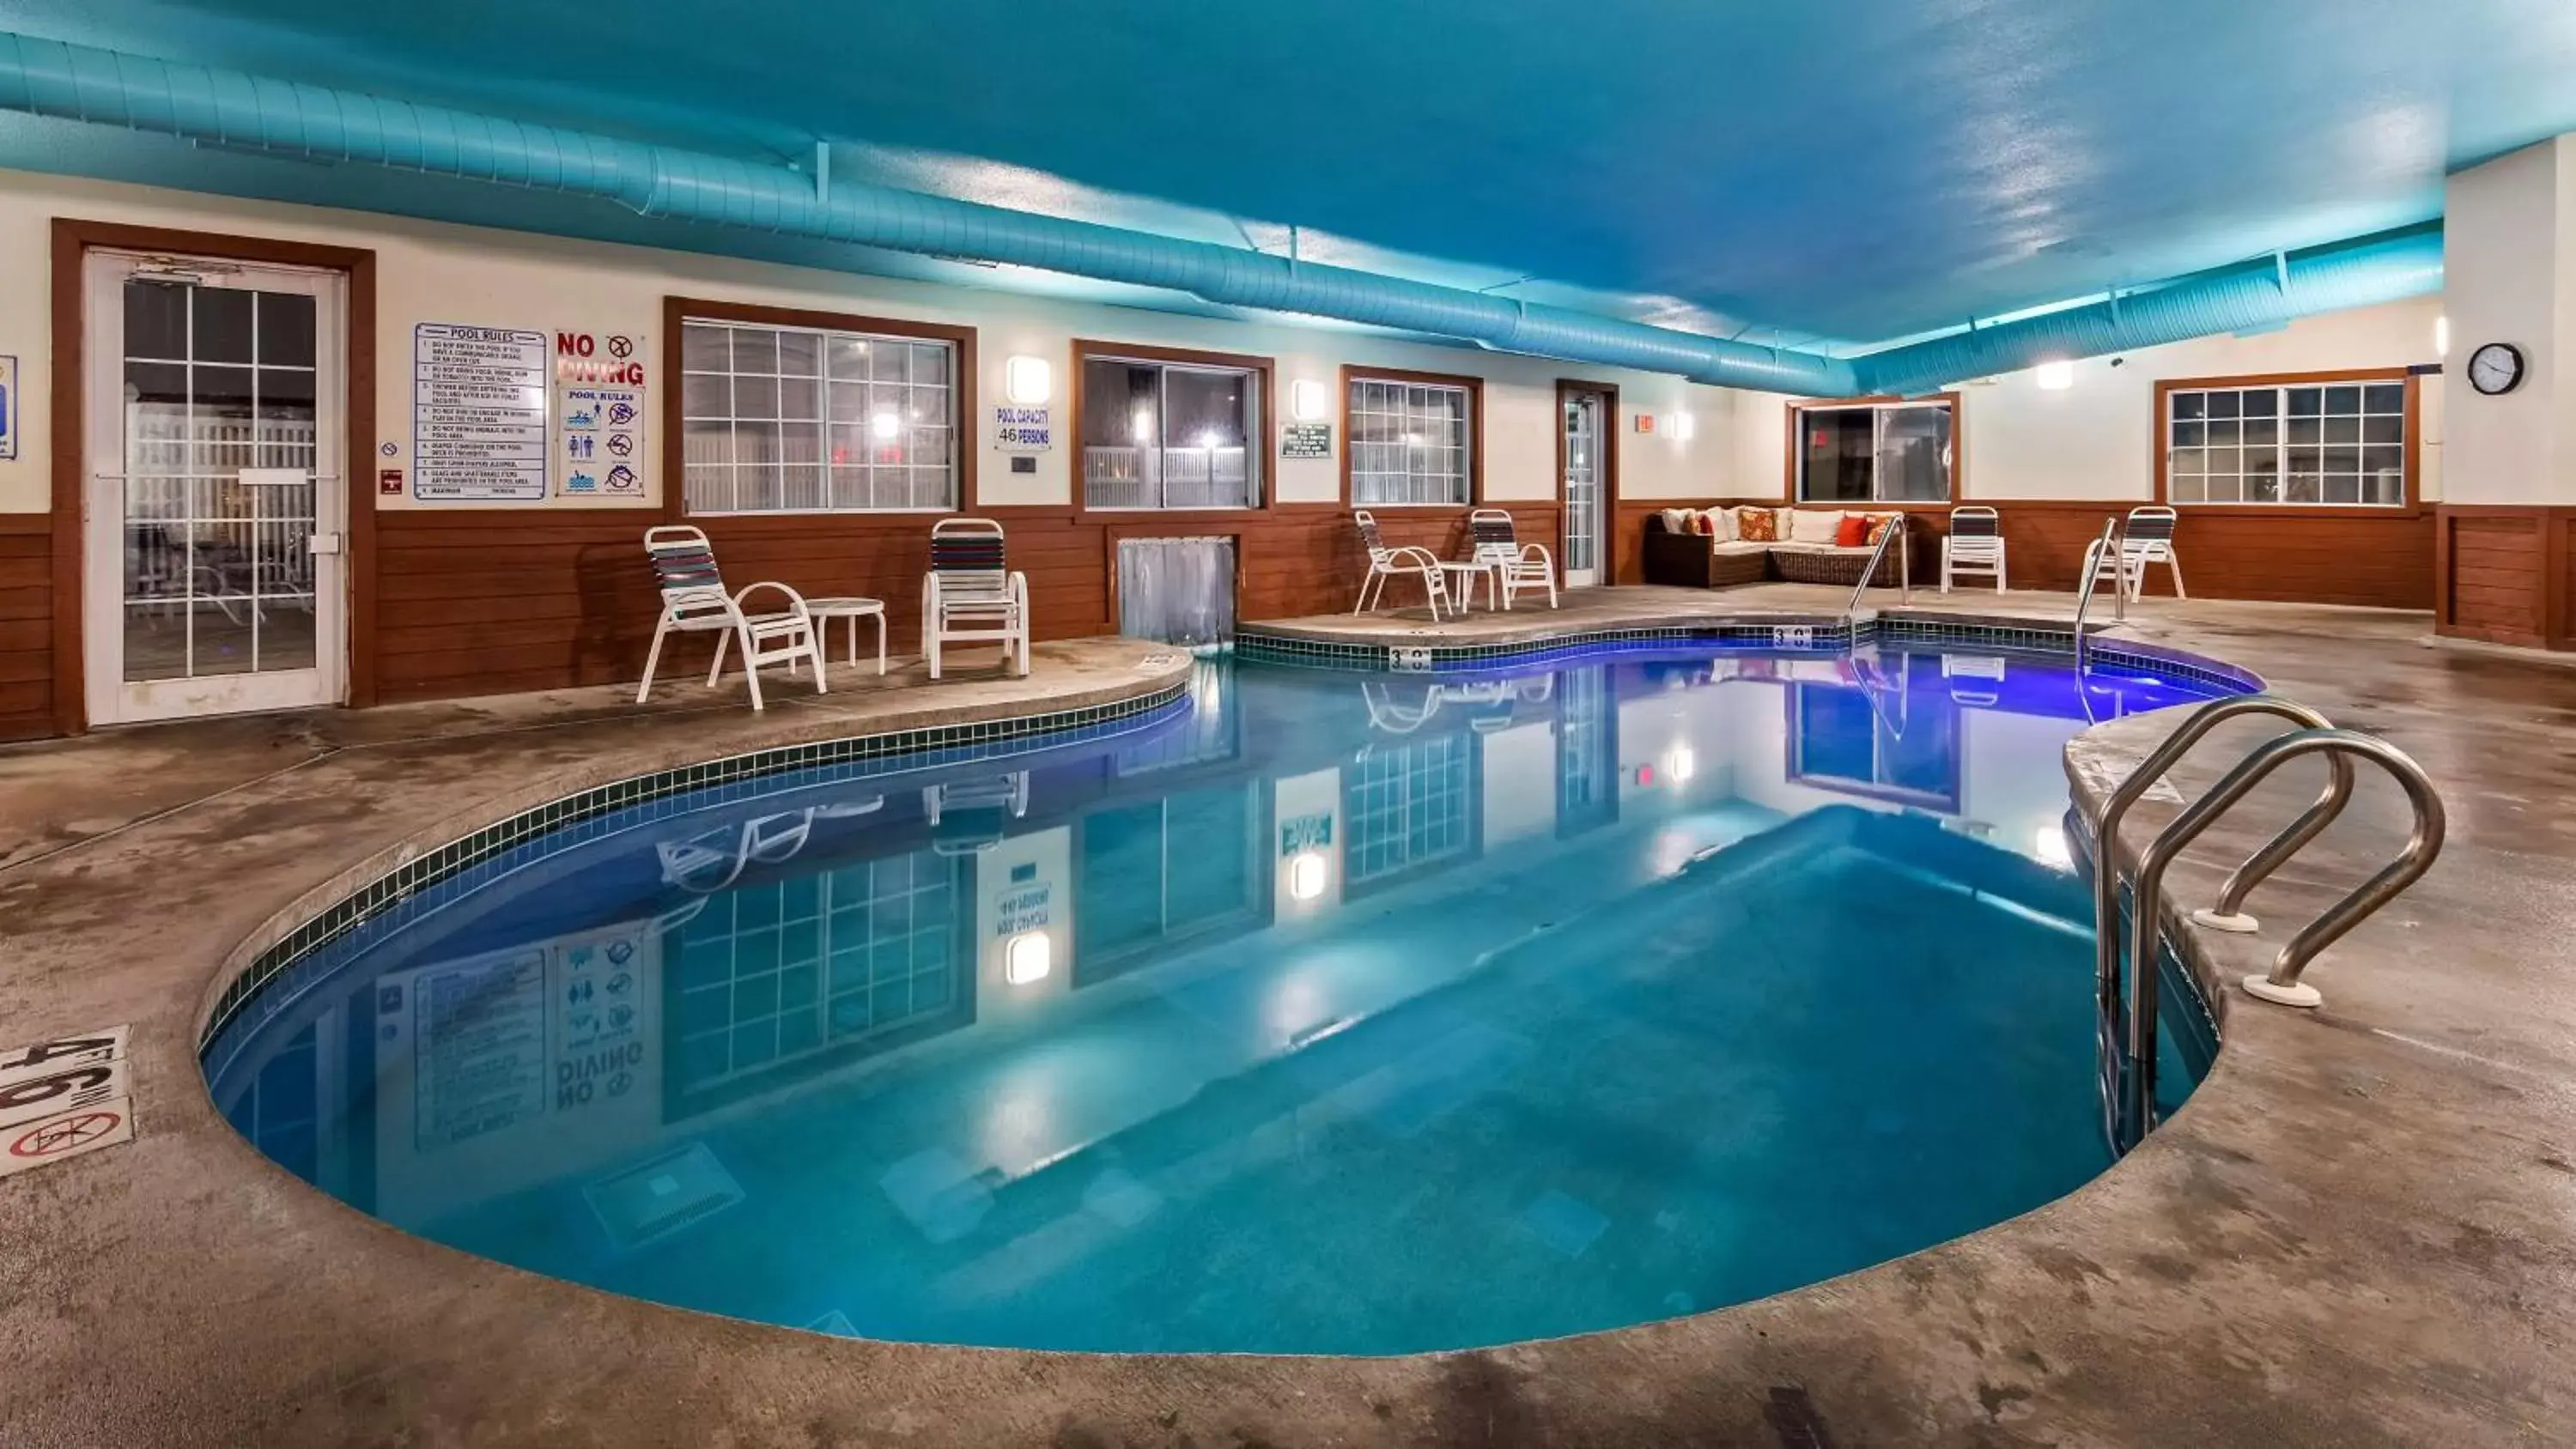 On site, Swimming Pool in Best Western Dodgeville Inn & Suites